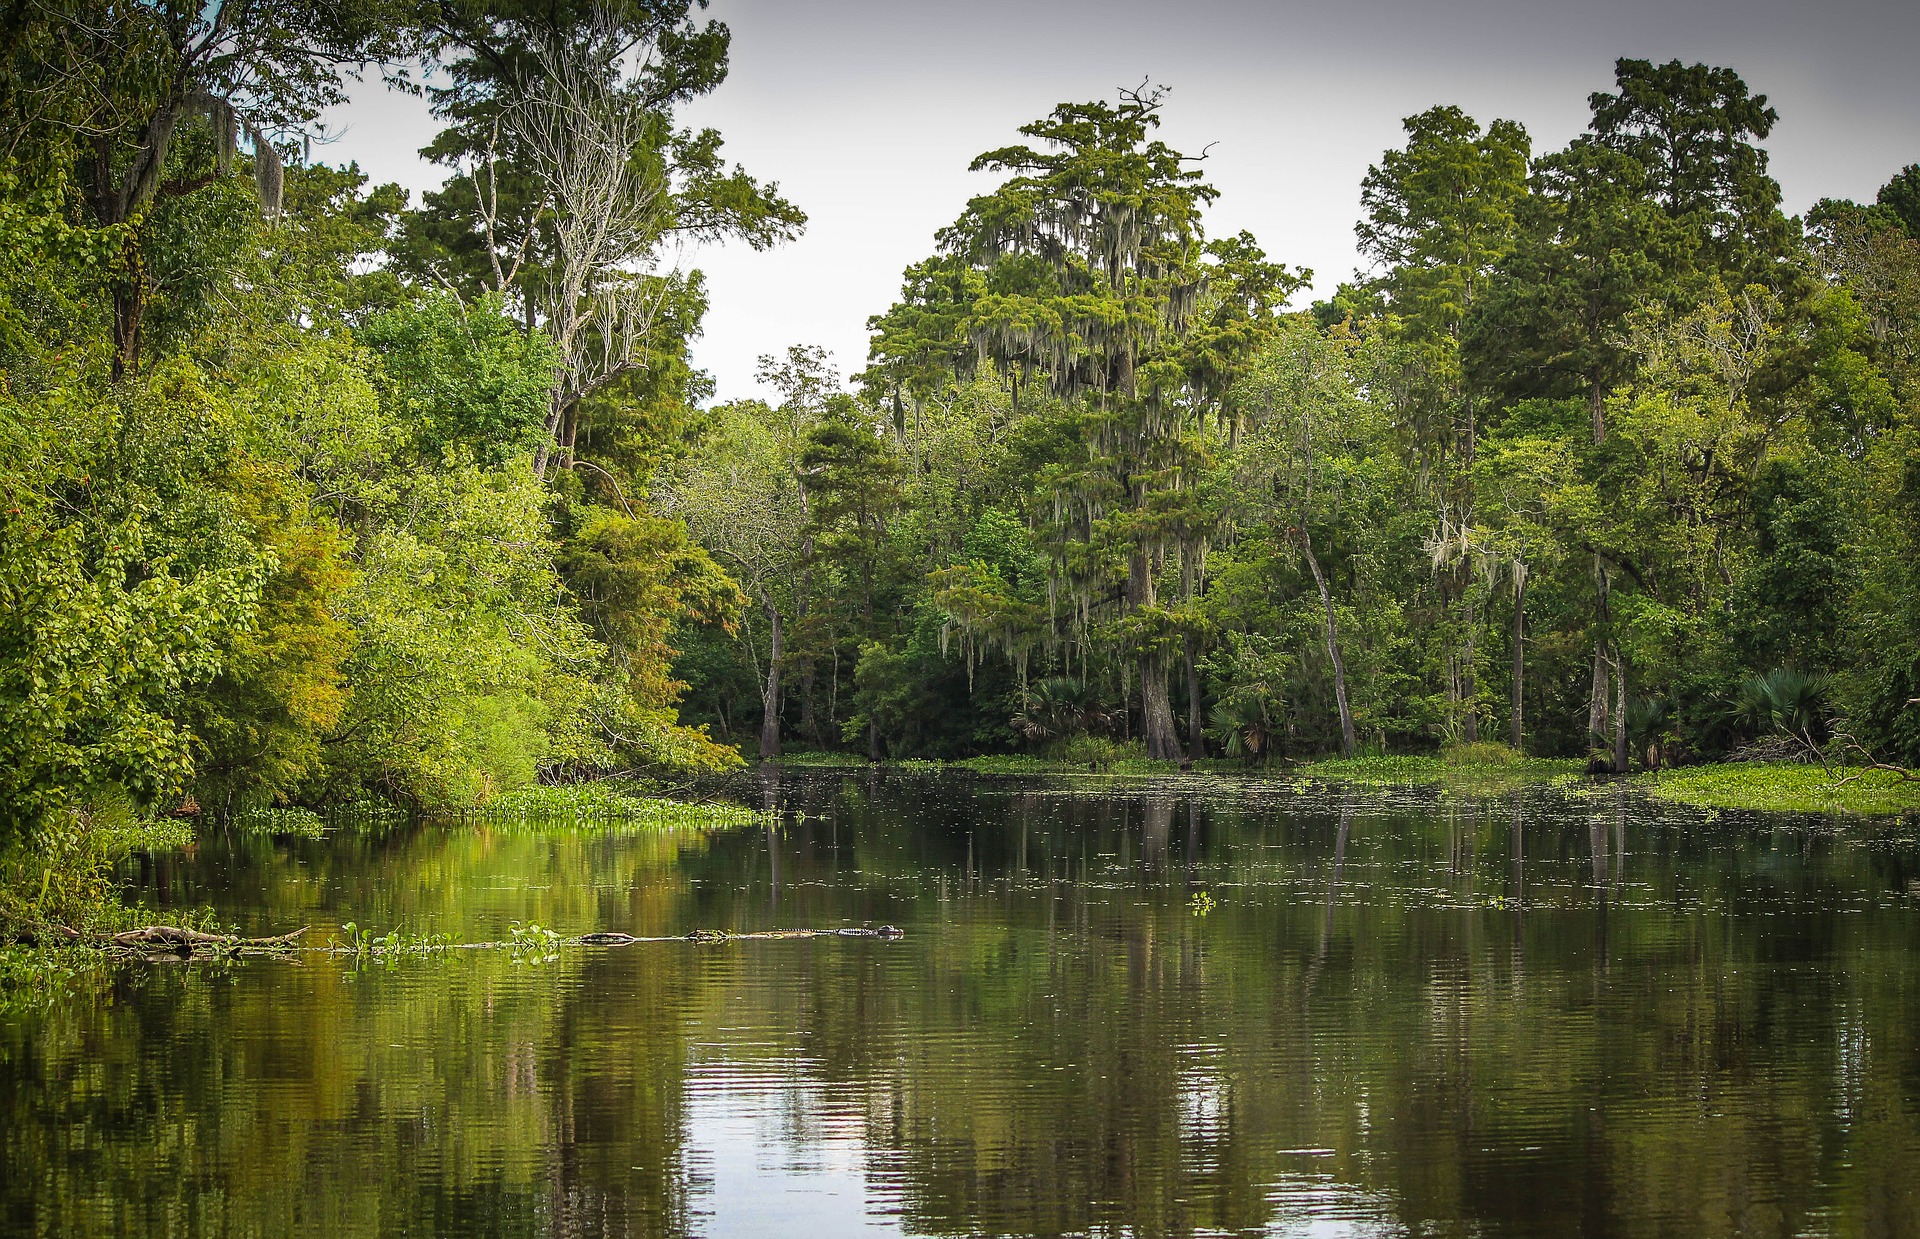 A tranquil bayou in Louisiana